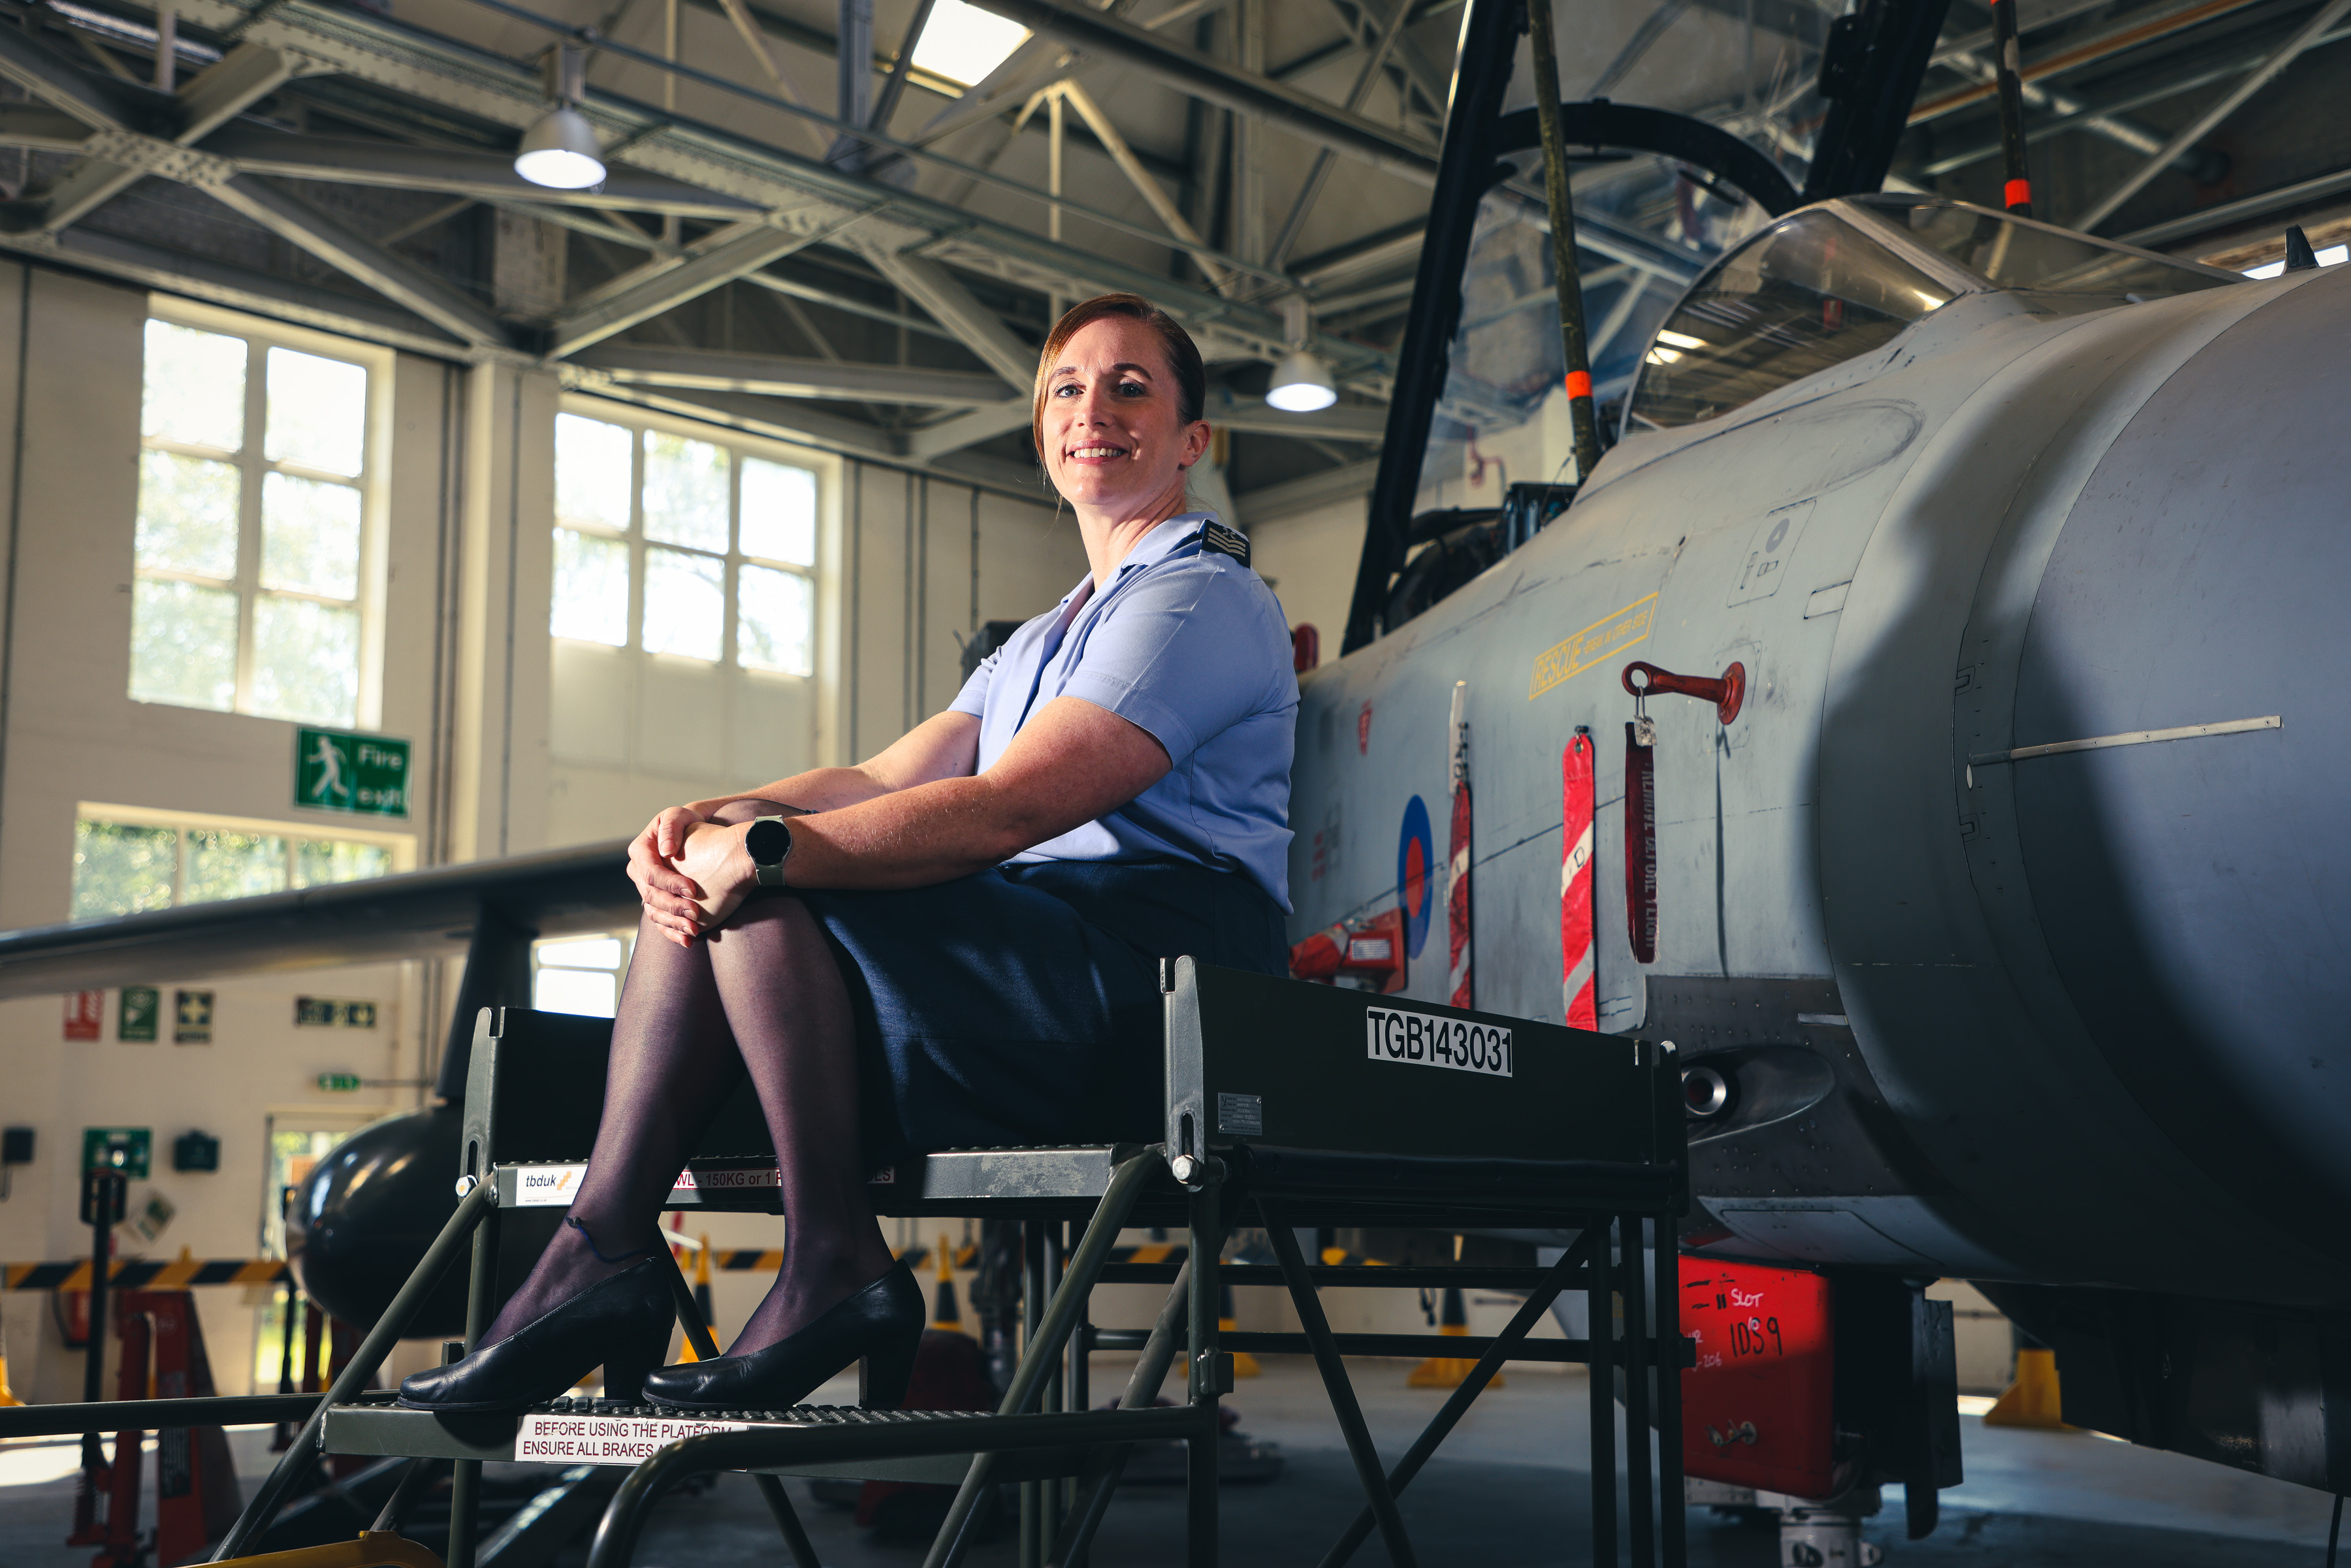 Chief Technician Morgan in RAF uniform in front of a RAF aircraft in a hangar